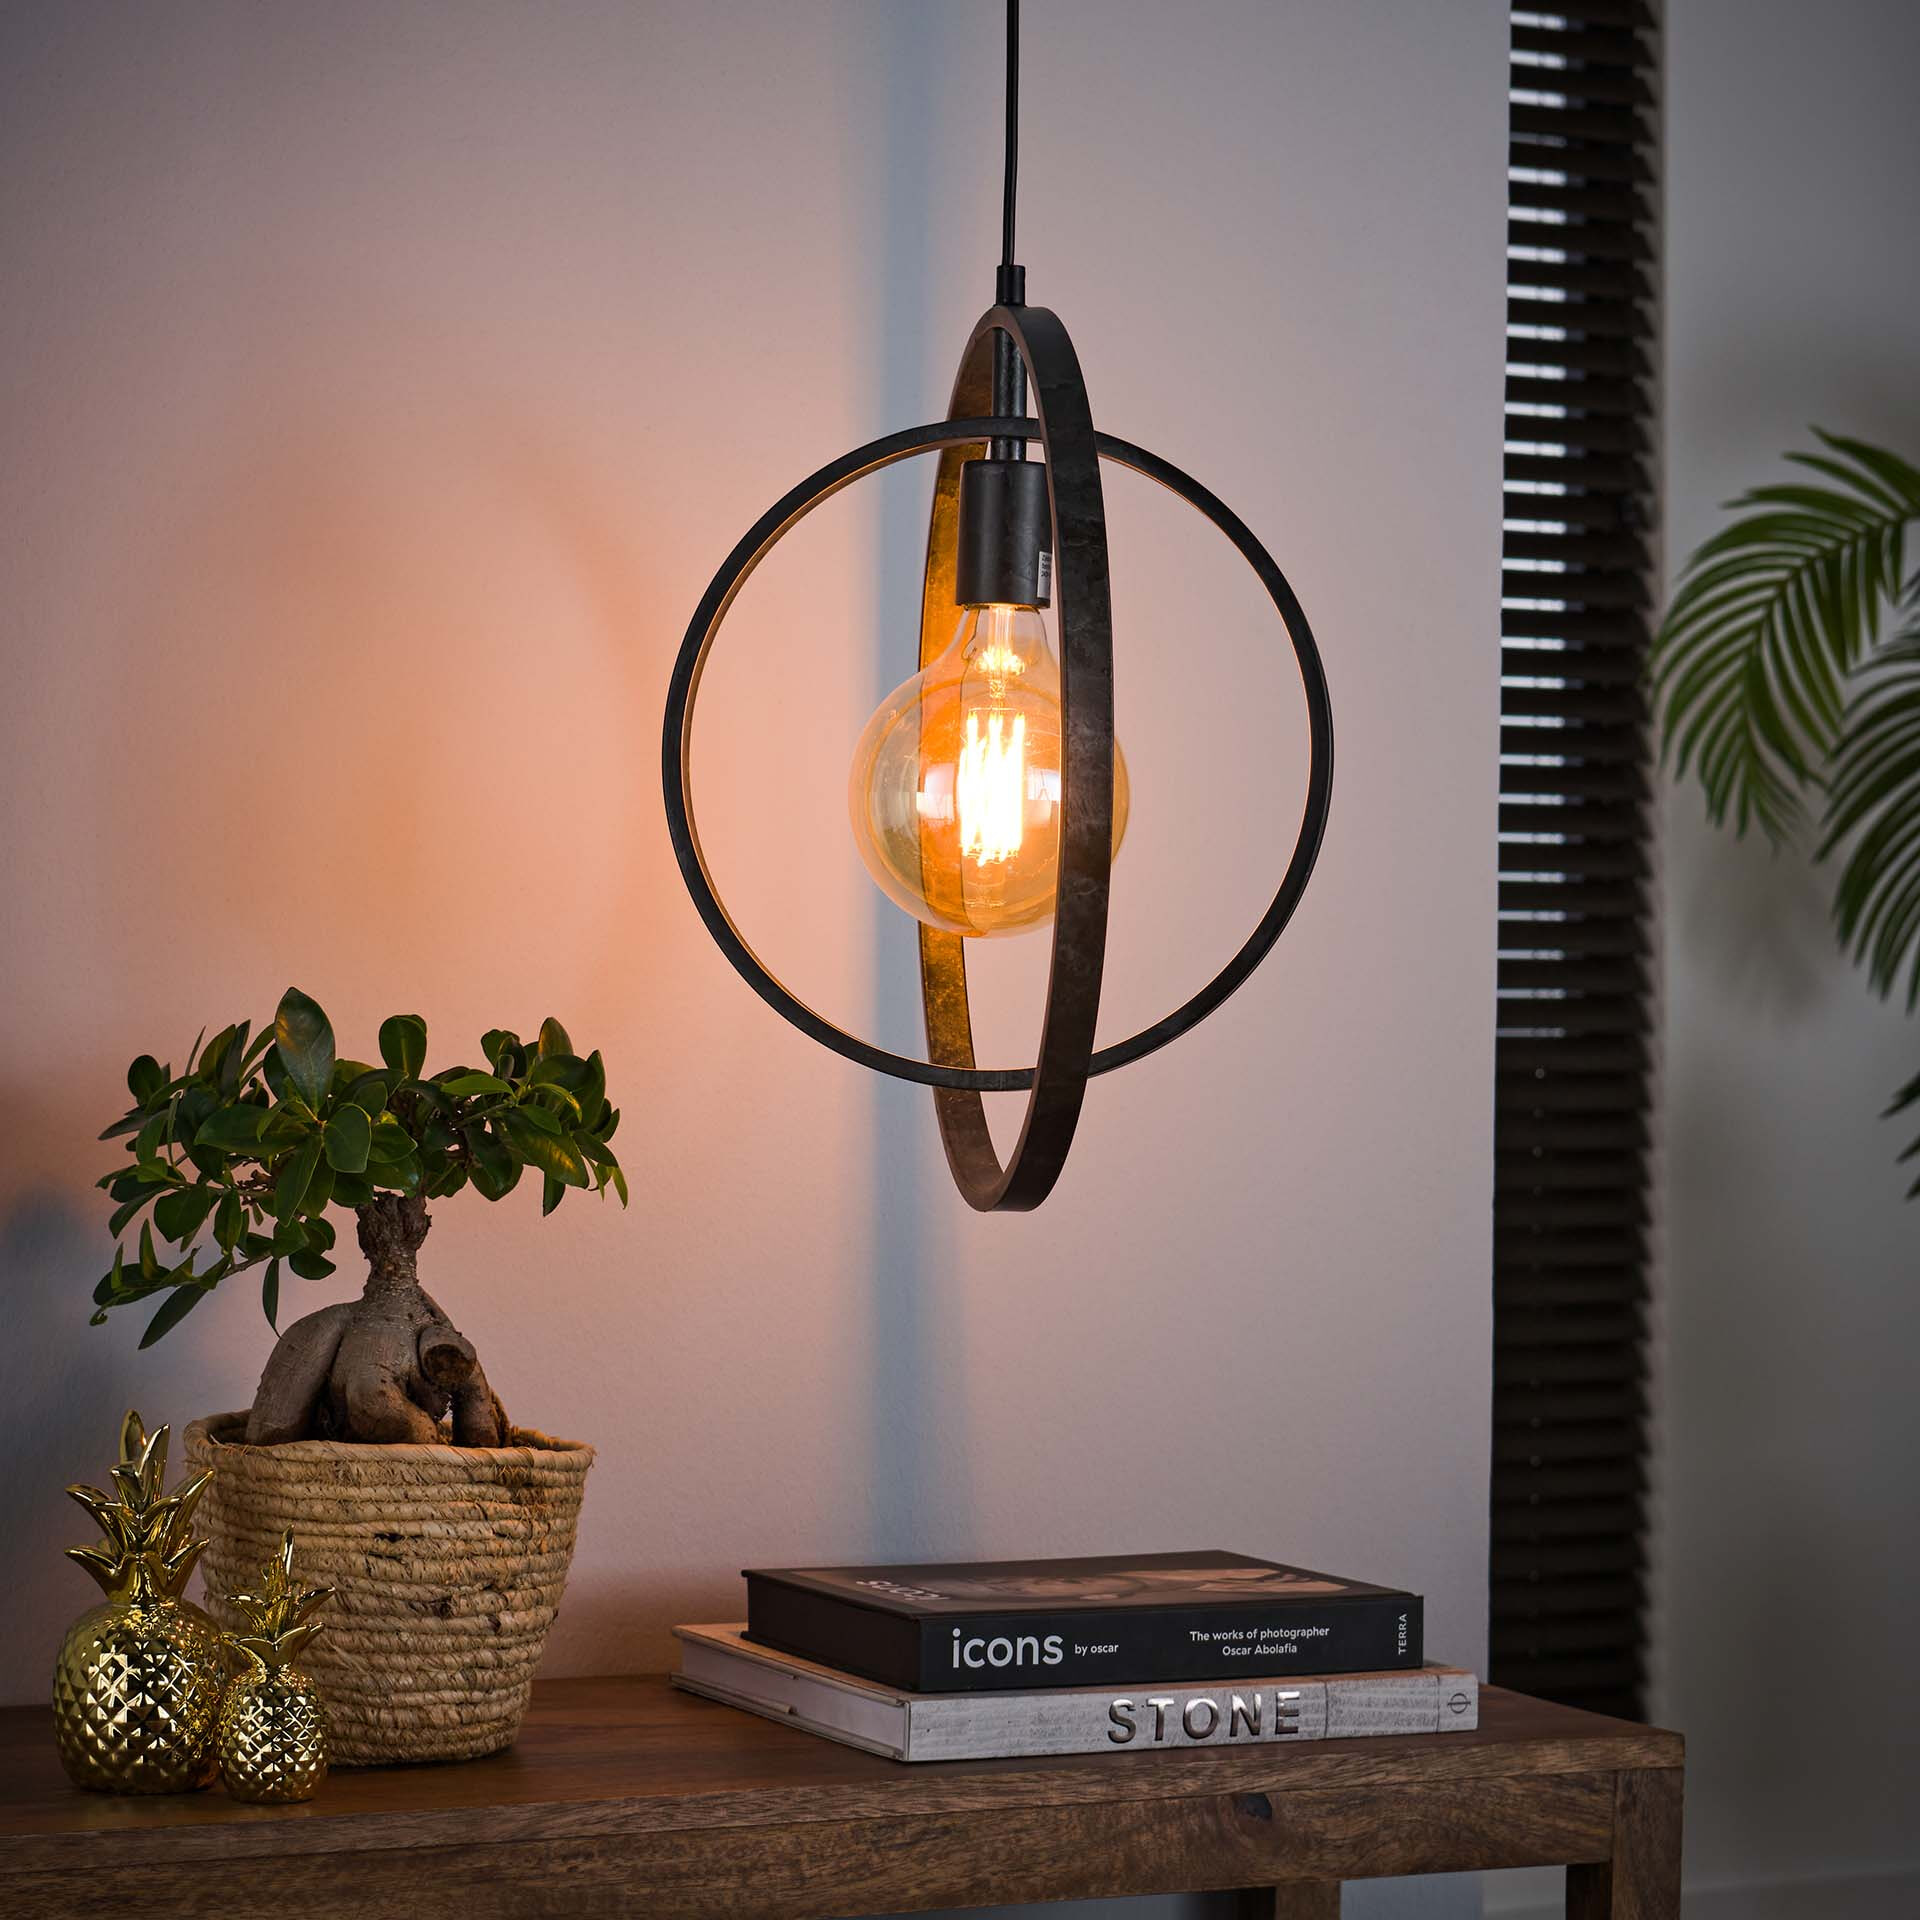 Hanglamp 'Tricia' 40 x 30cm, kleur Zwart